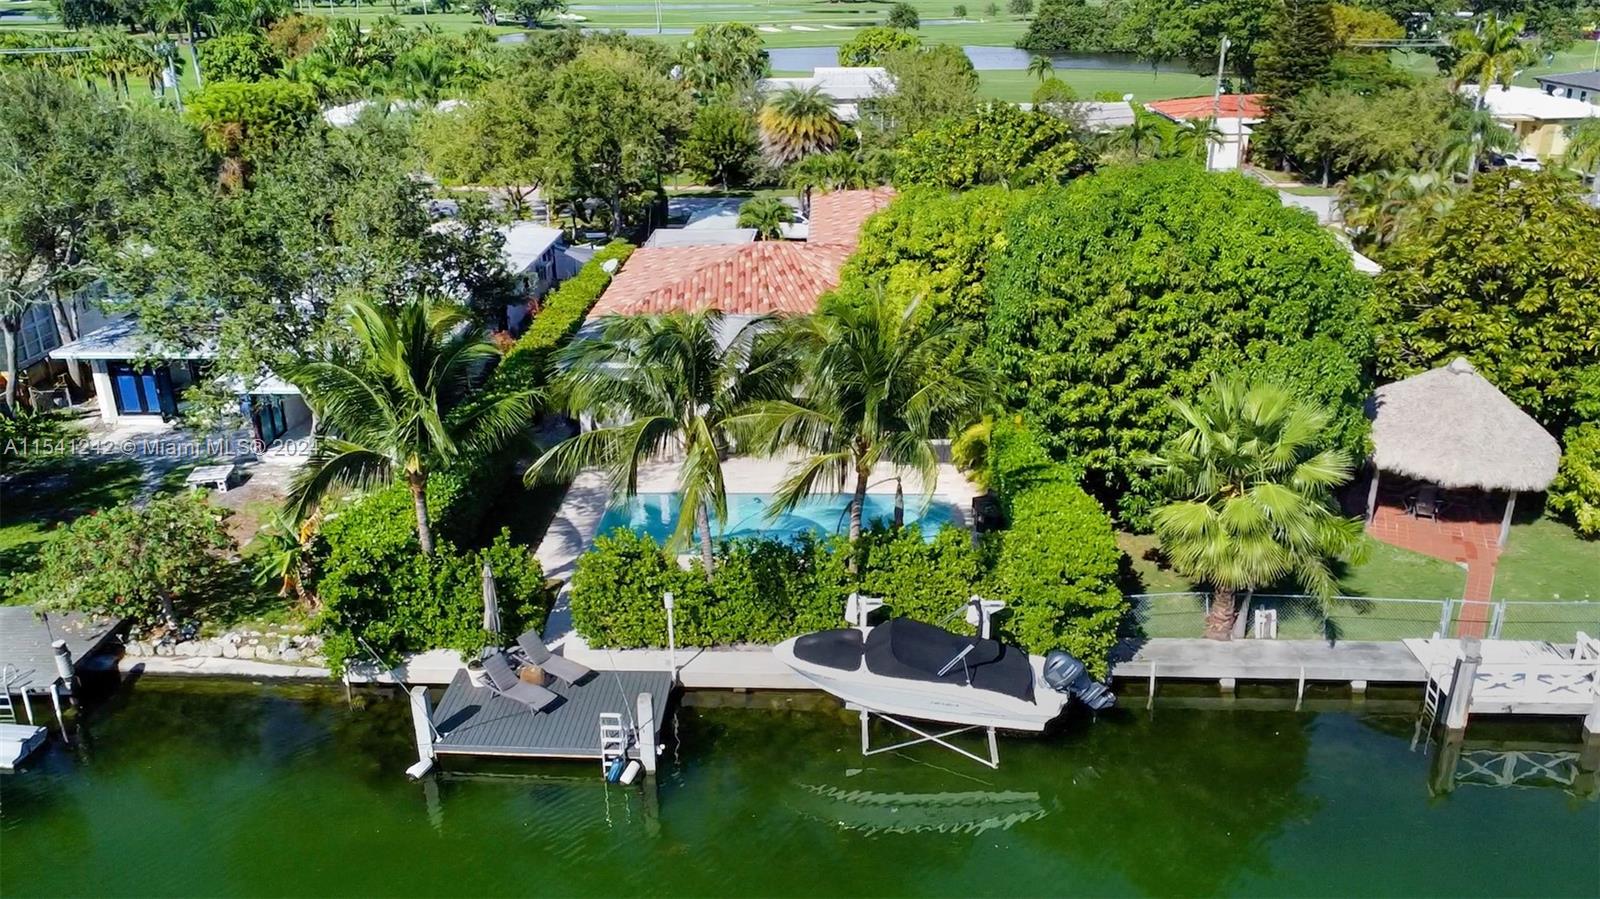 Property for Sale at 650 S Shore Dr, Miami Beach, Miami-Dade County, Florida - Bedrooms: 4 
Bathrooms: 3  - $3,475,000